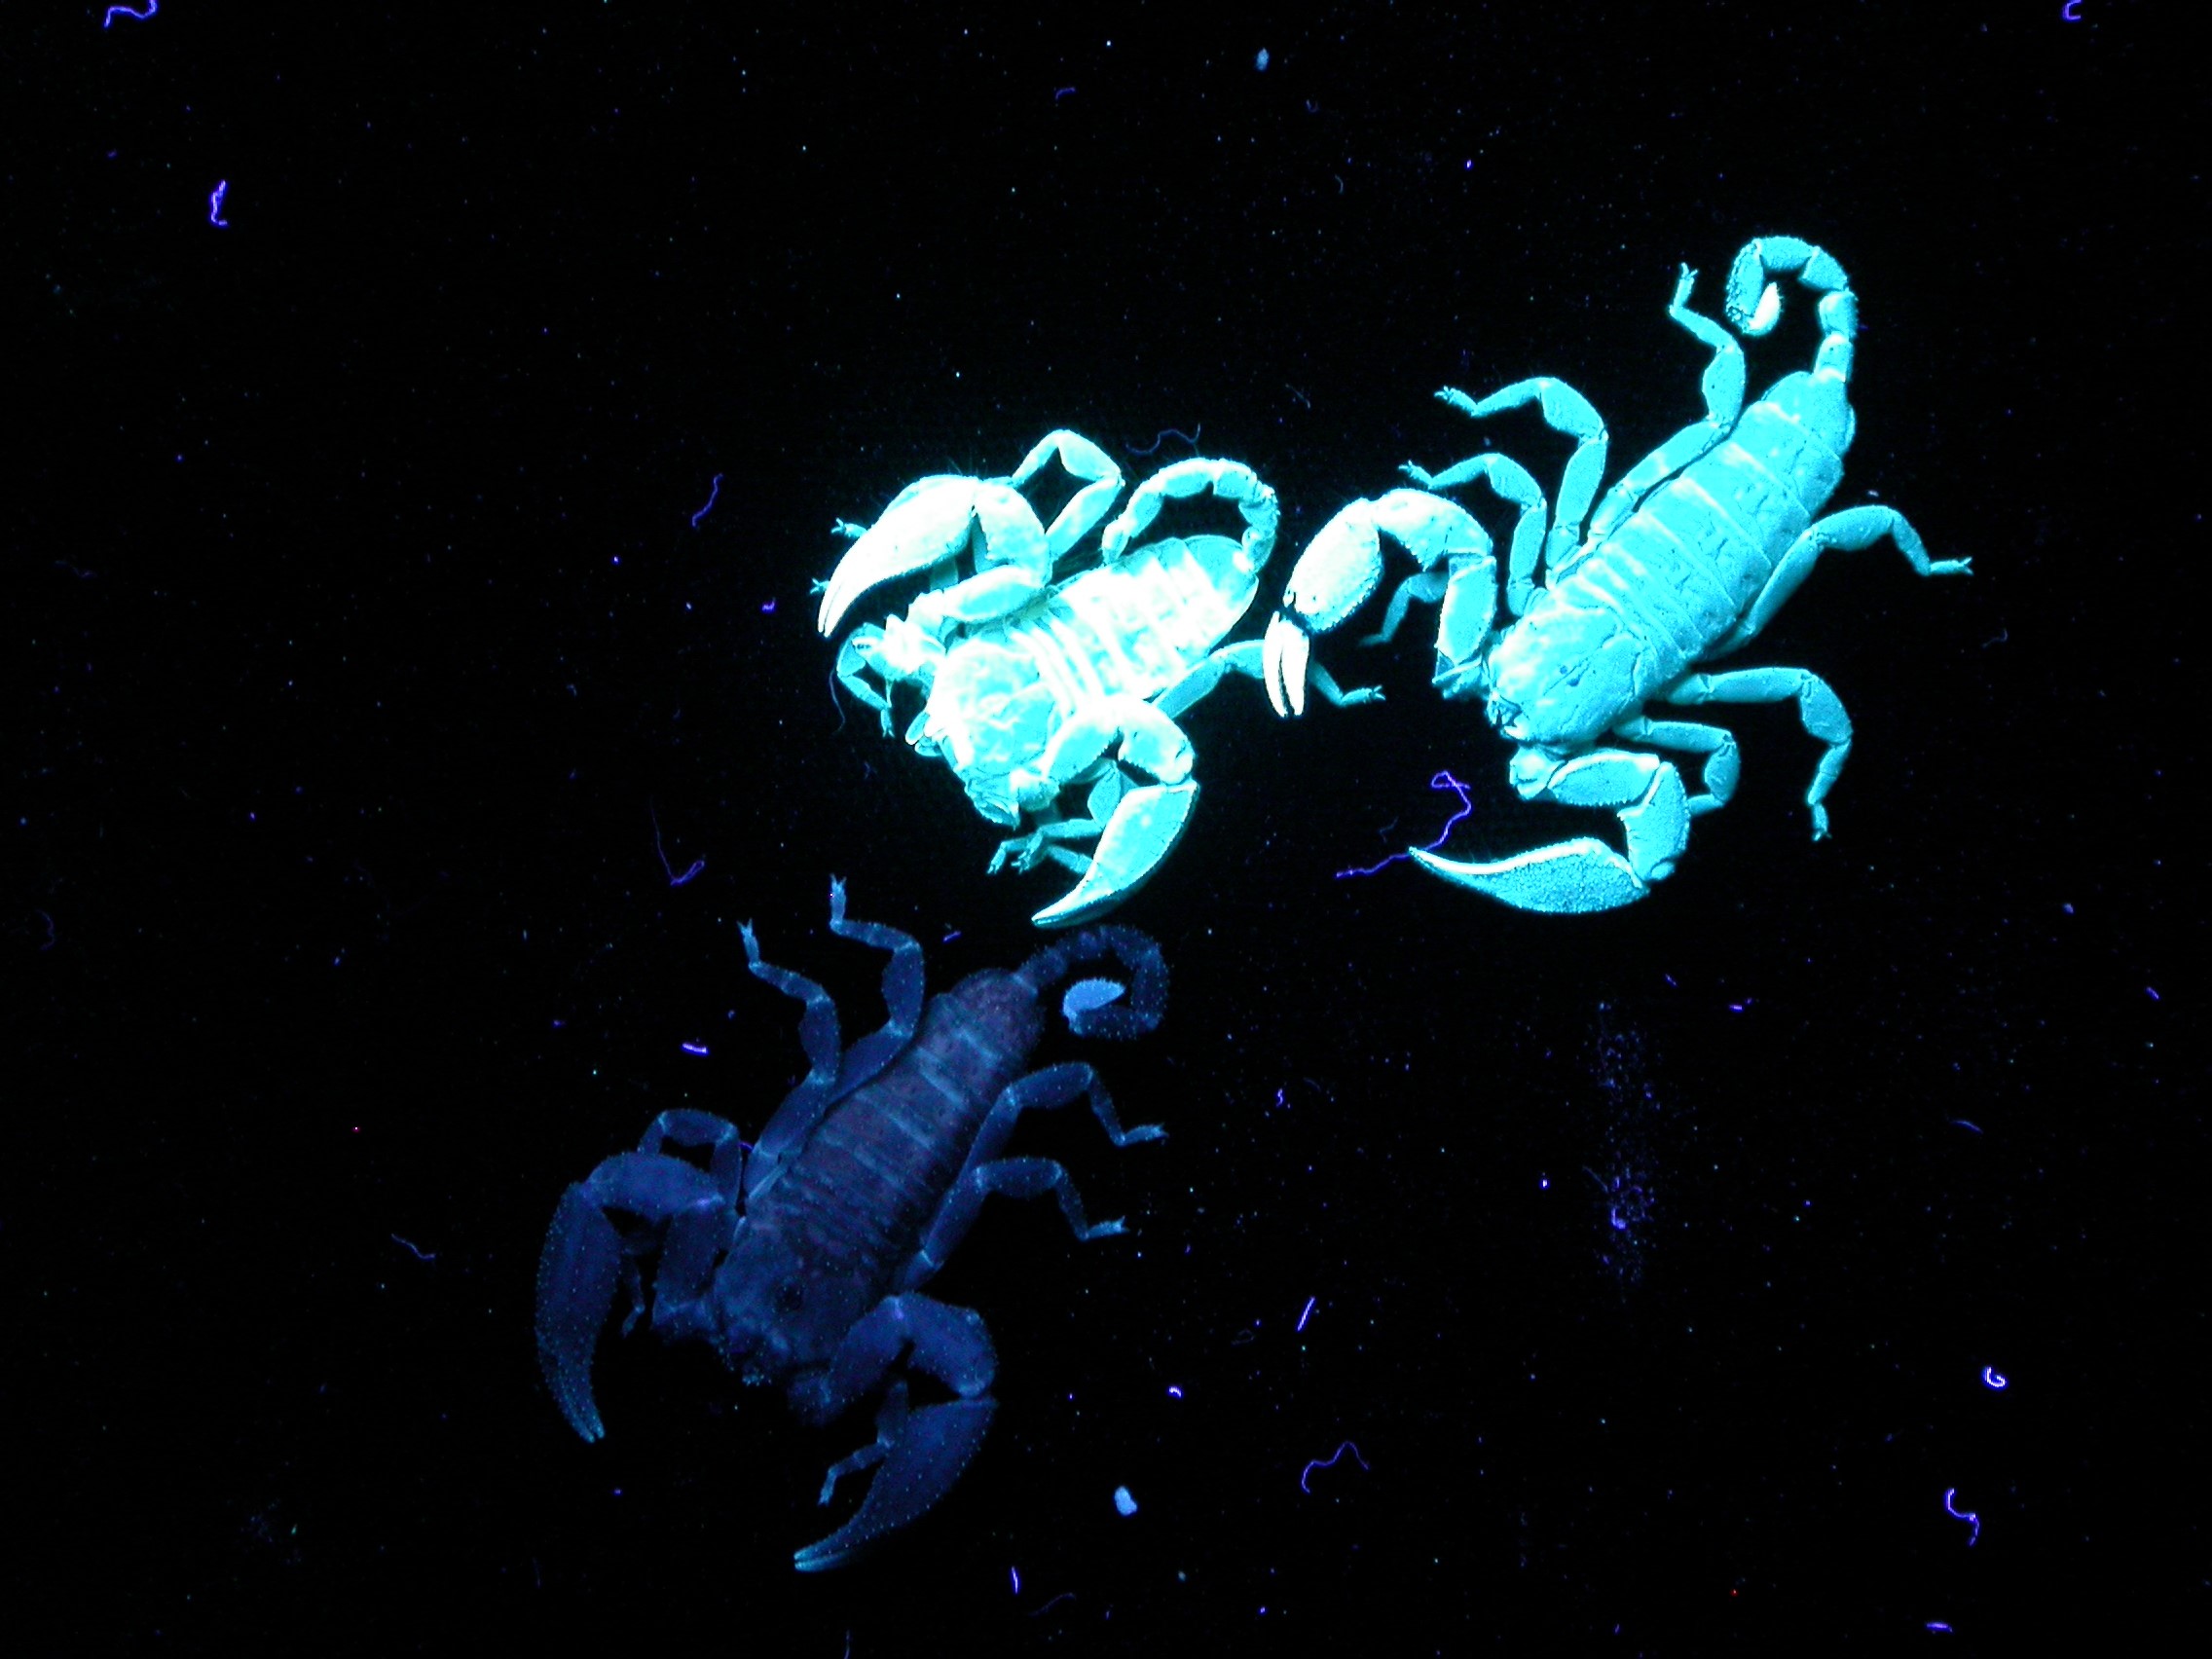 Scorpion Crossbrille 2017 Blau